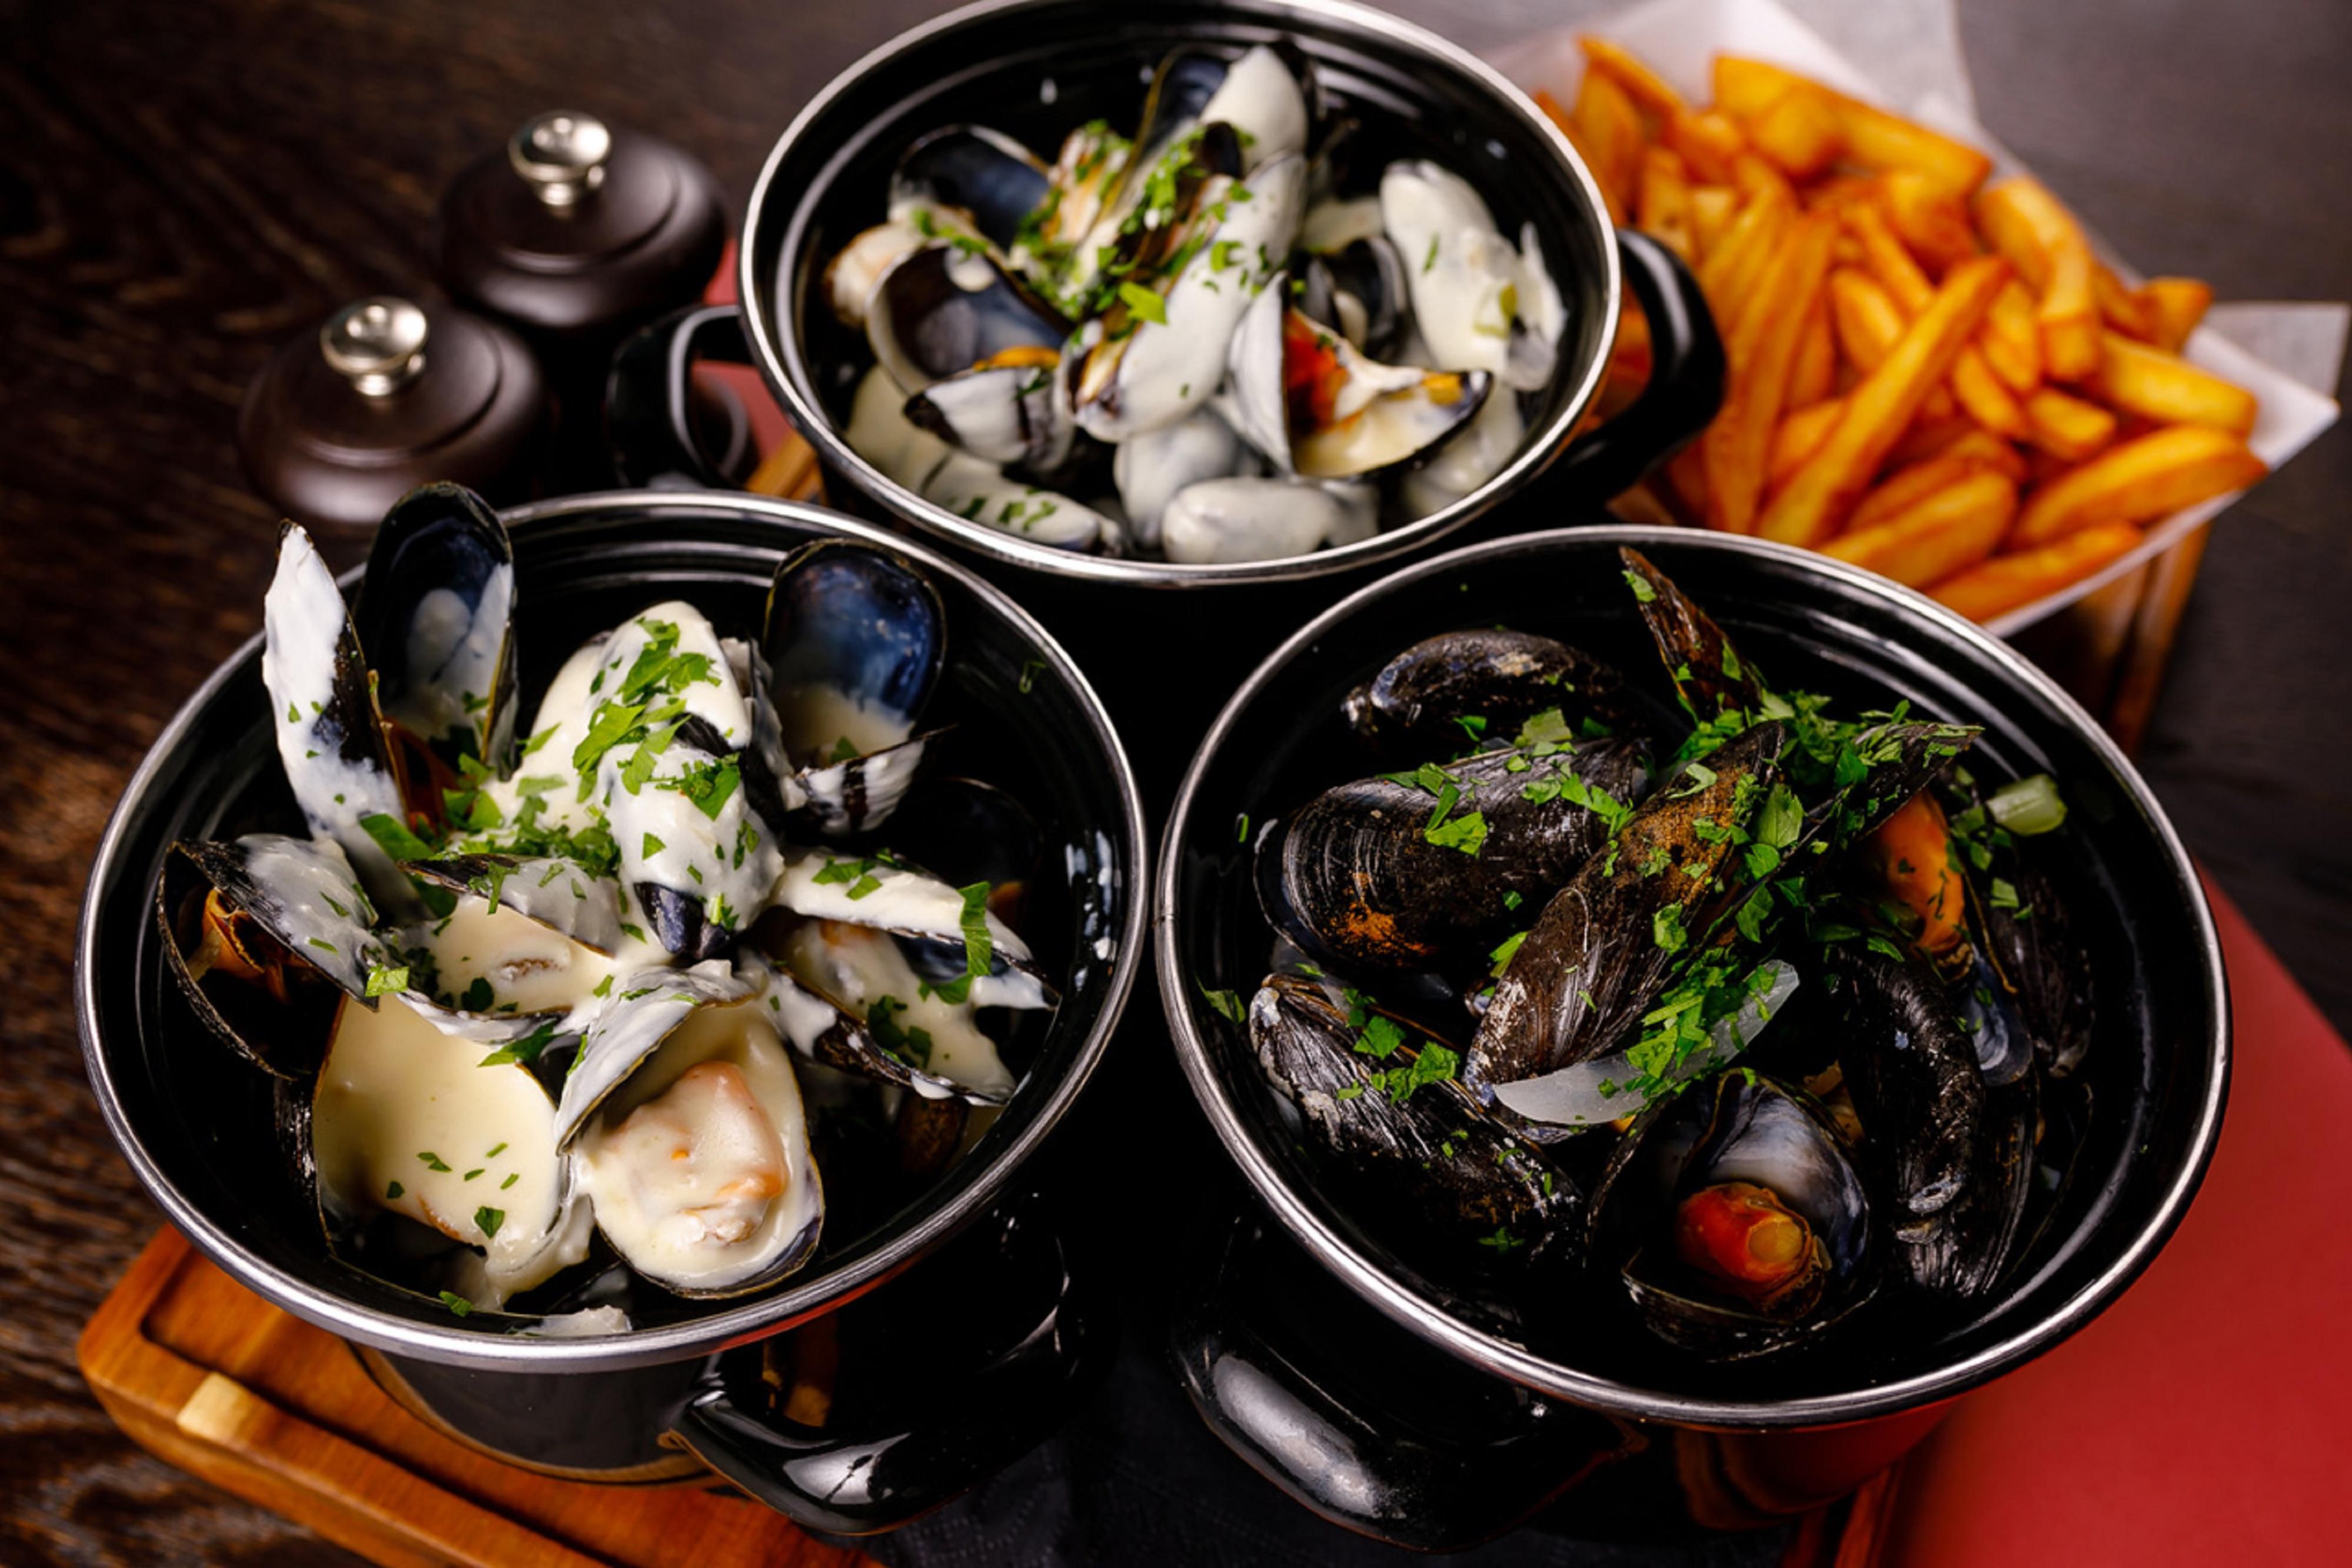 Taste the amazingly fresh mussels at Le Petit Belge.